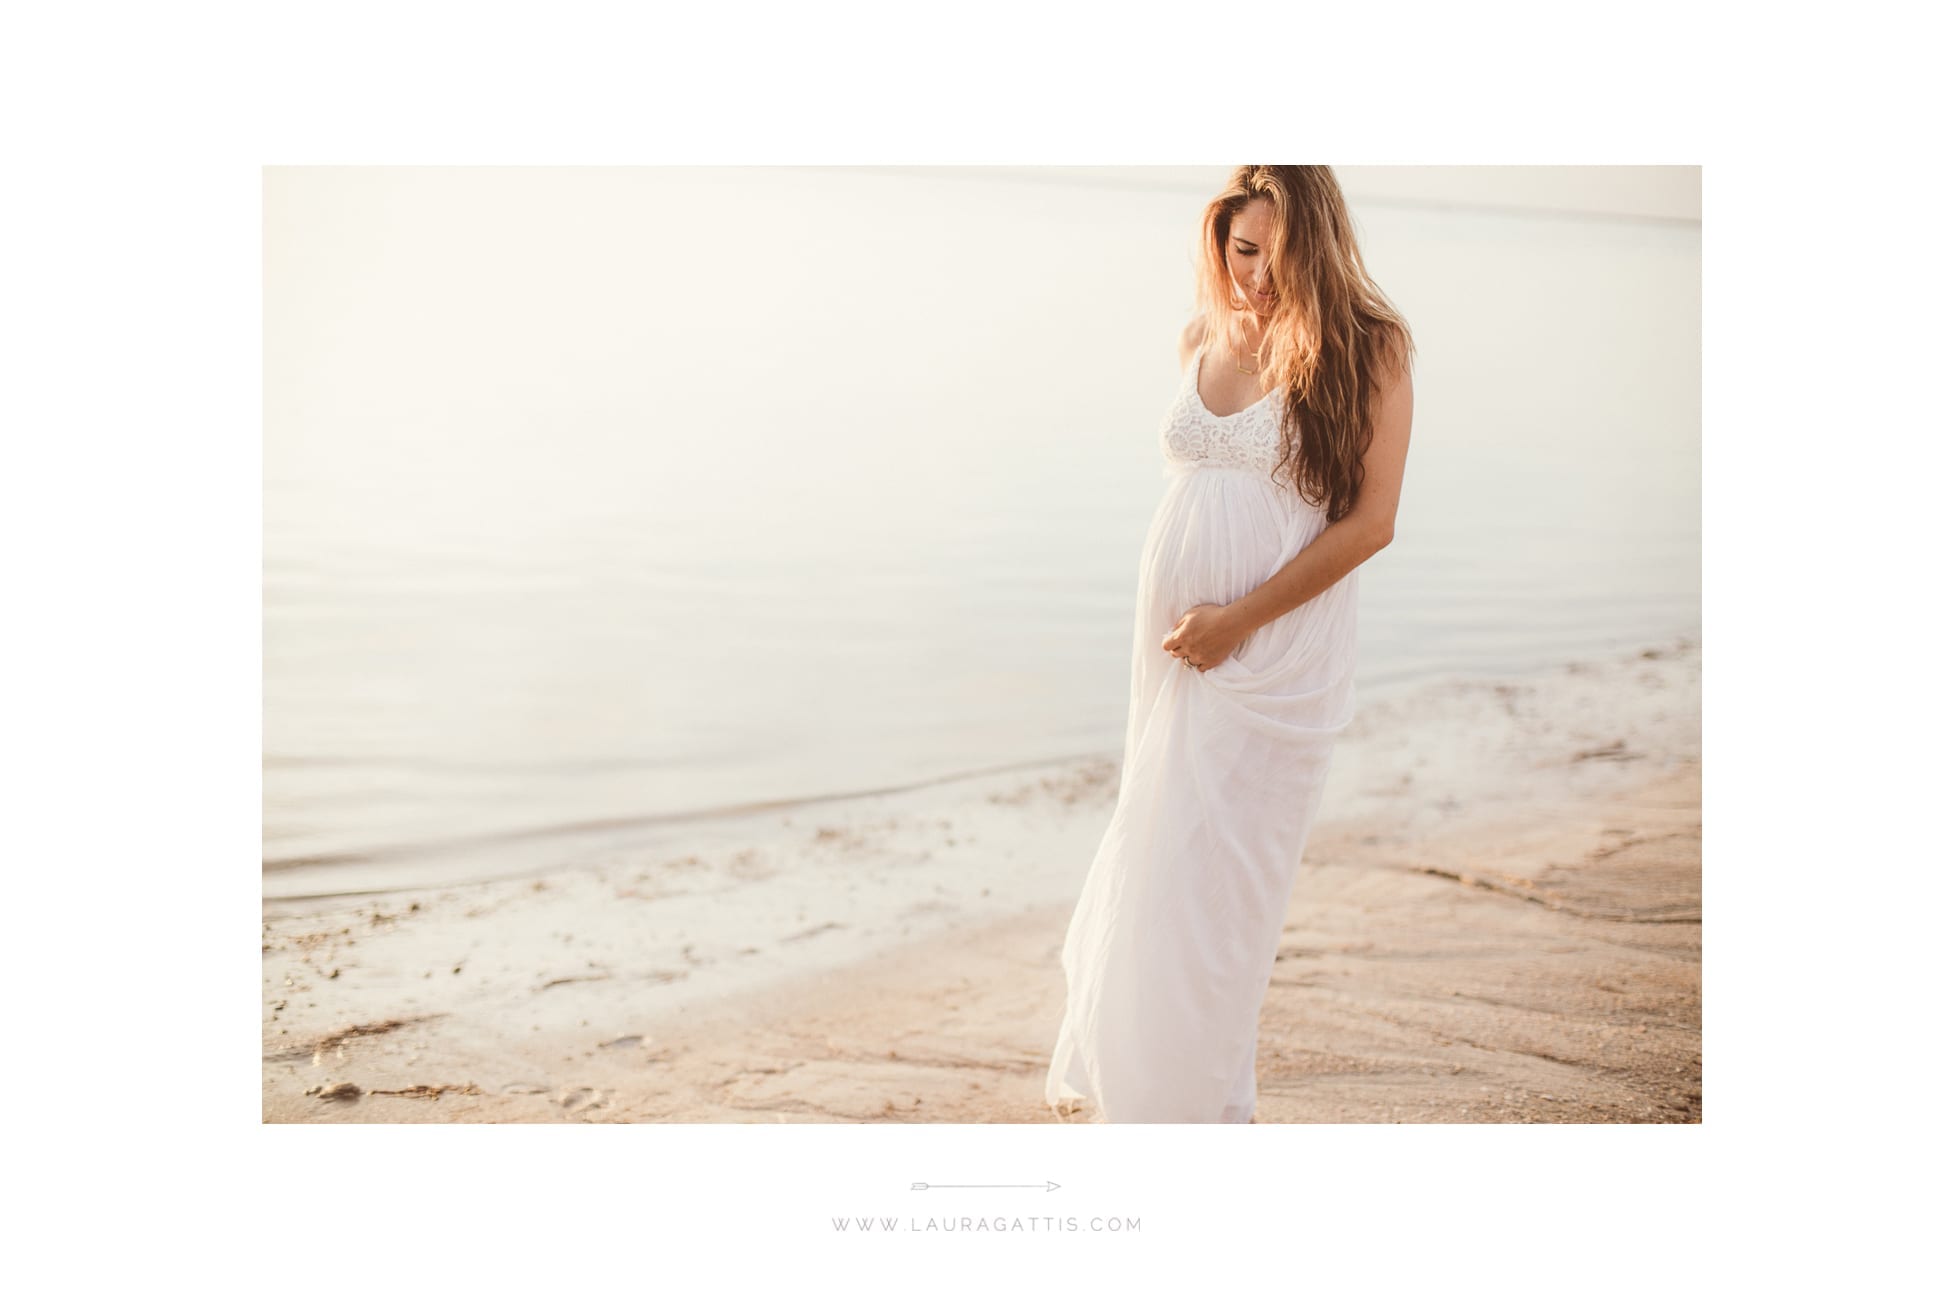 natural light beach maternity session | laura gattis photography